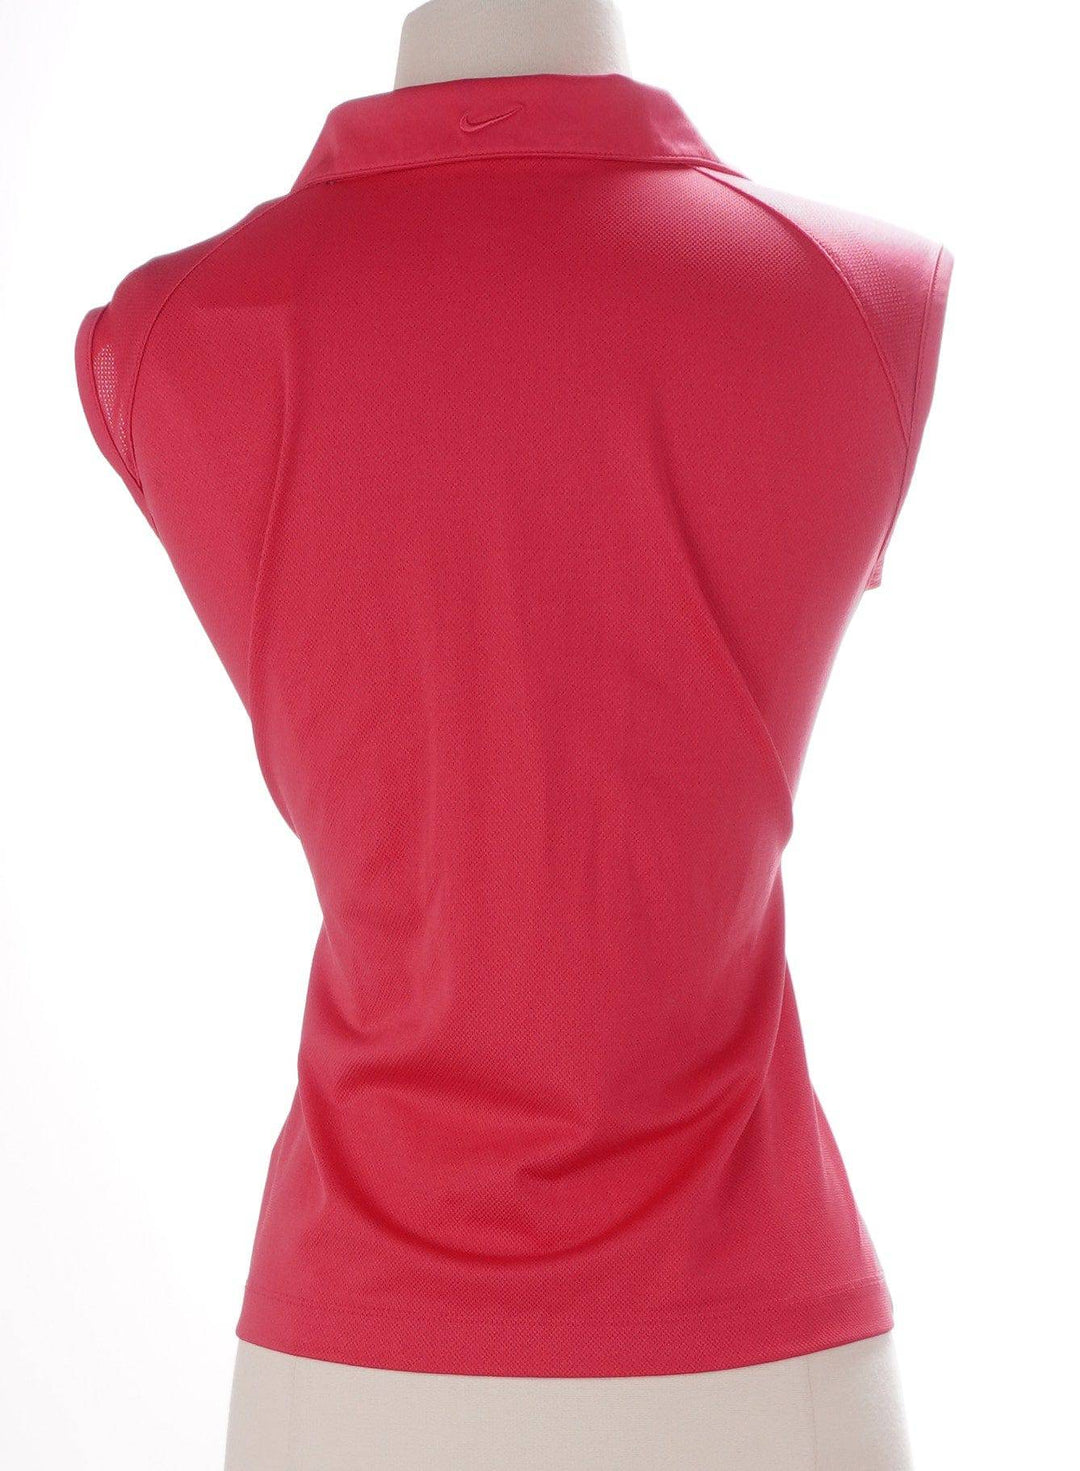 Nike Golf Medium / Pink / Consigned Nike Golf Sleeveless Top - Pink - Size Medium